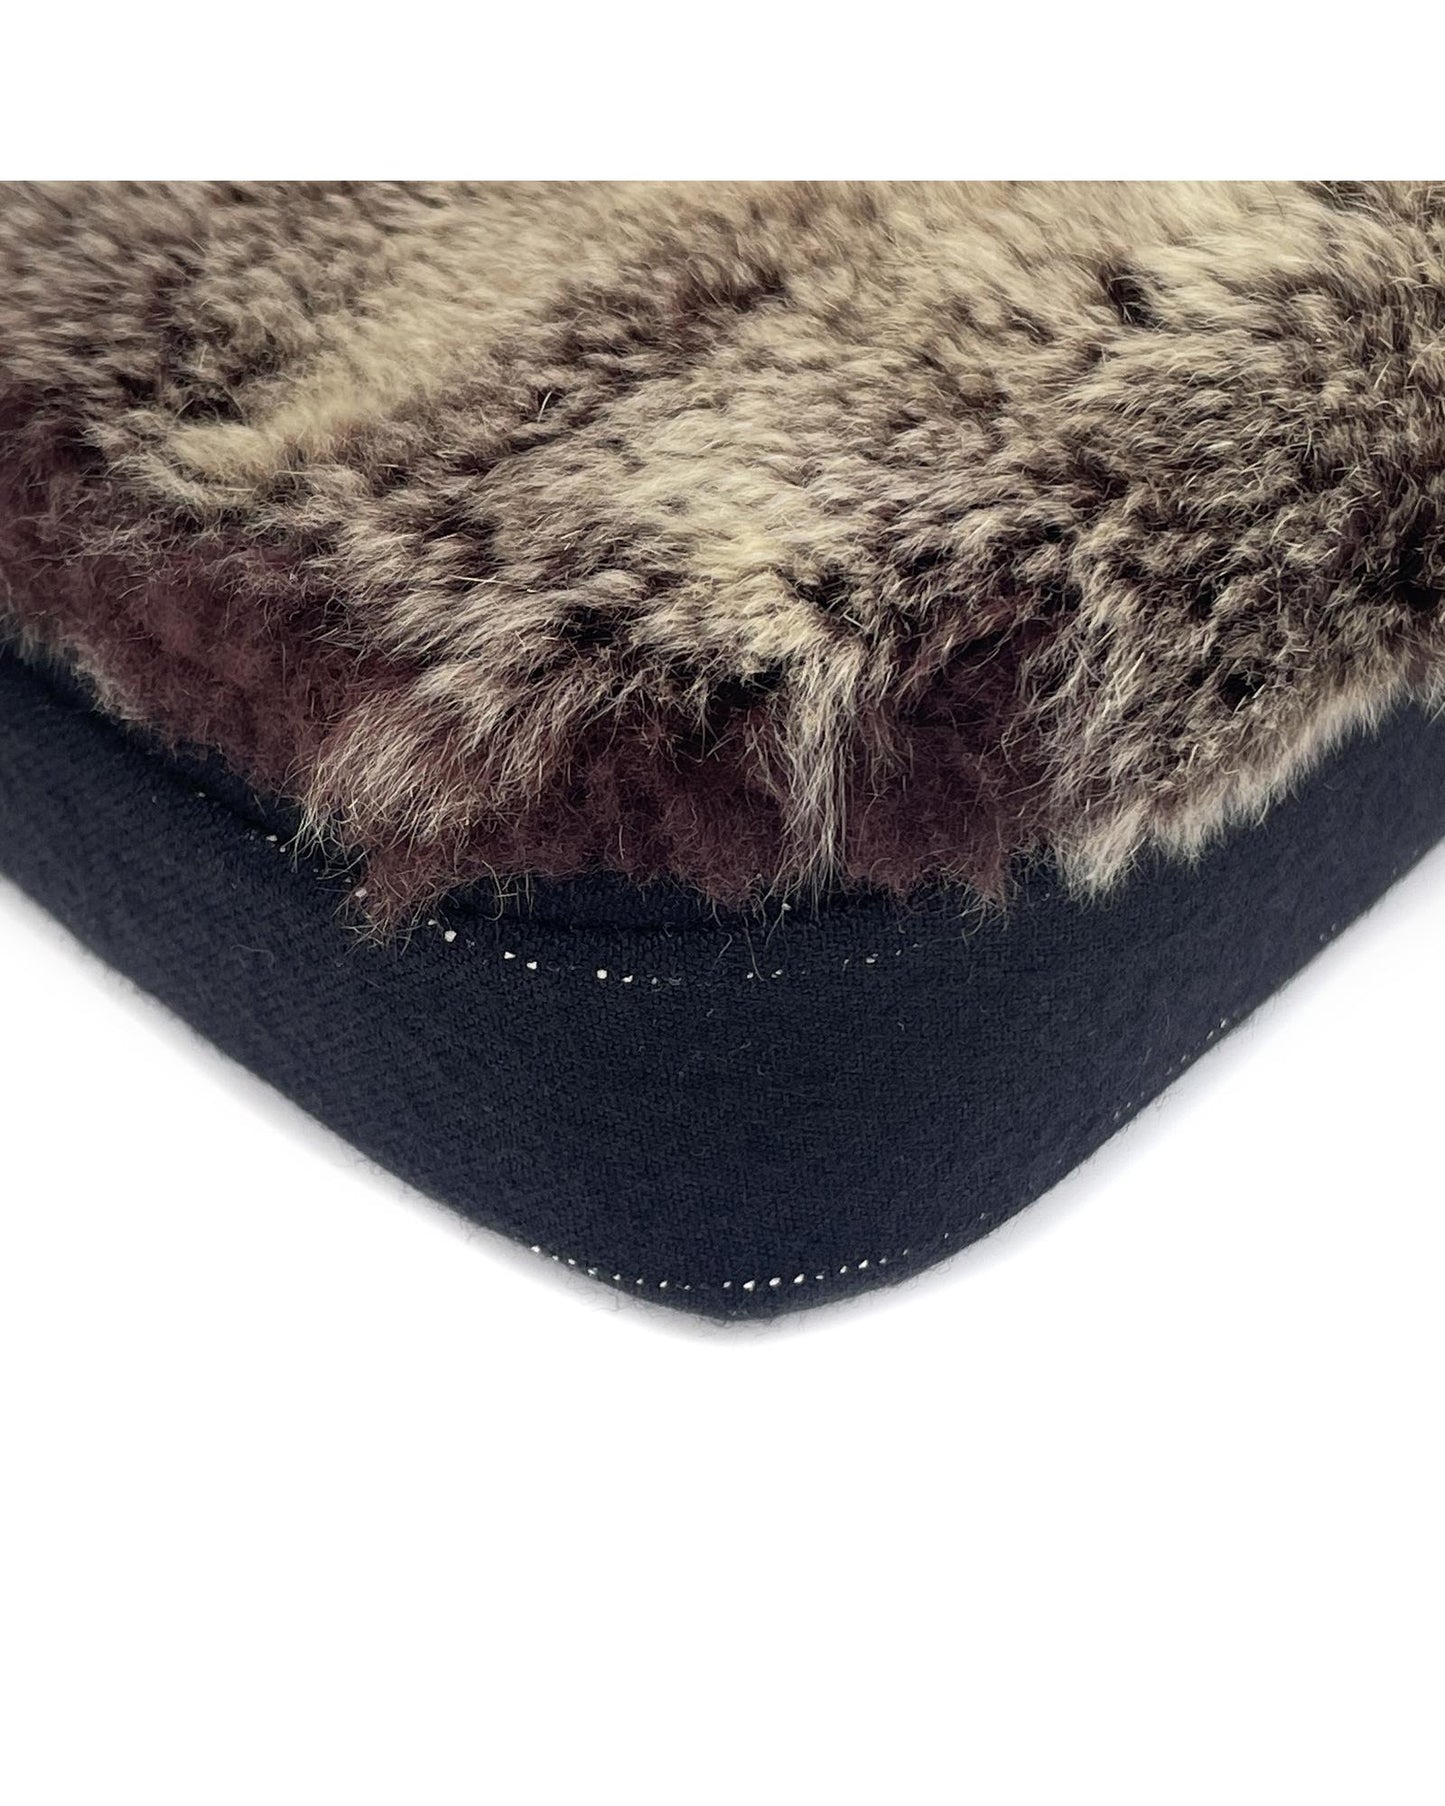 Dior Women's Fur Shoulder Bag in Brown - Excellent Condition in Brown